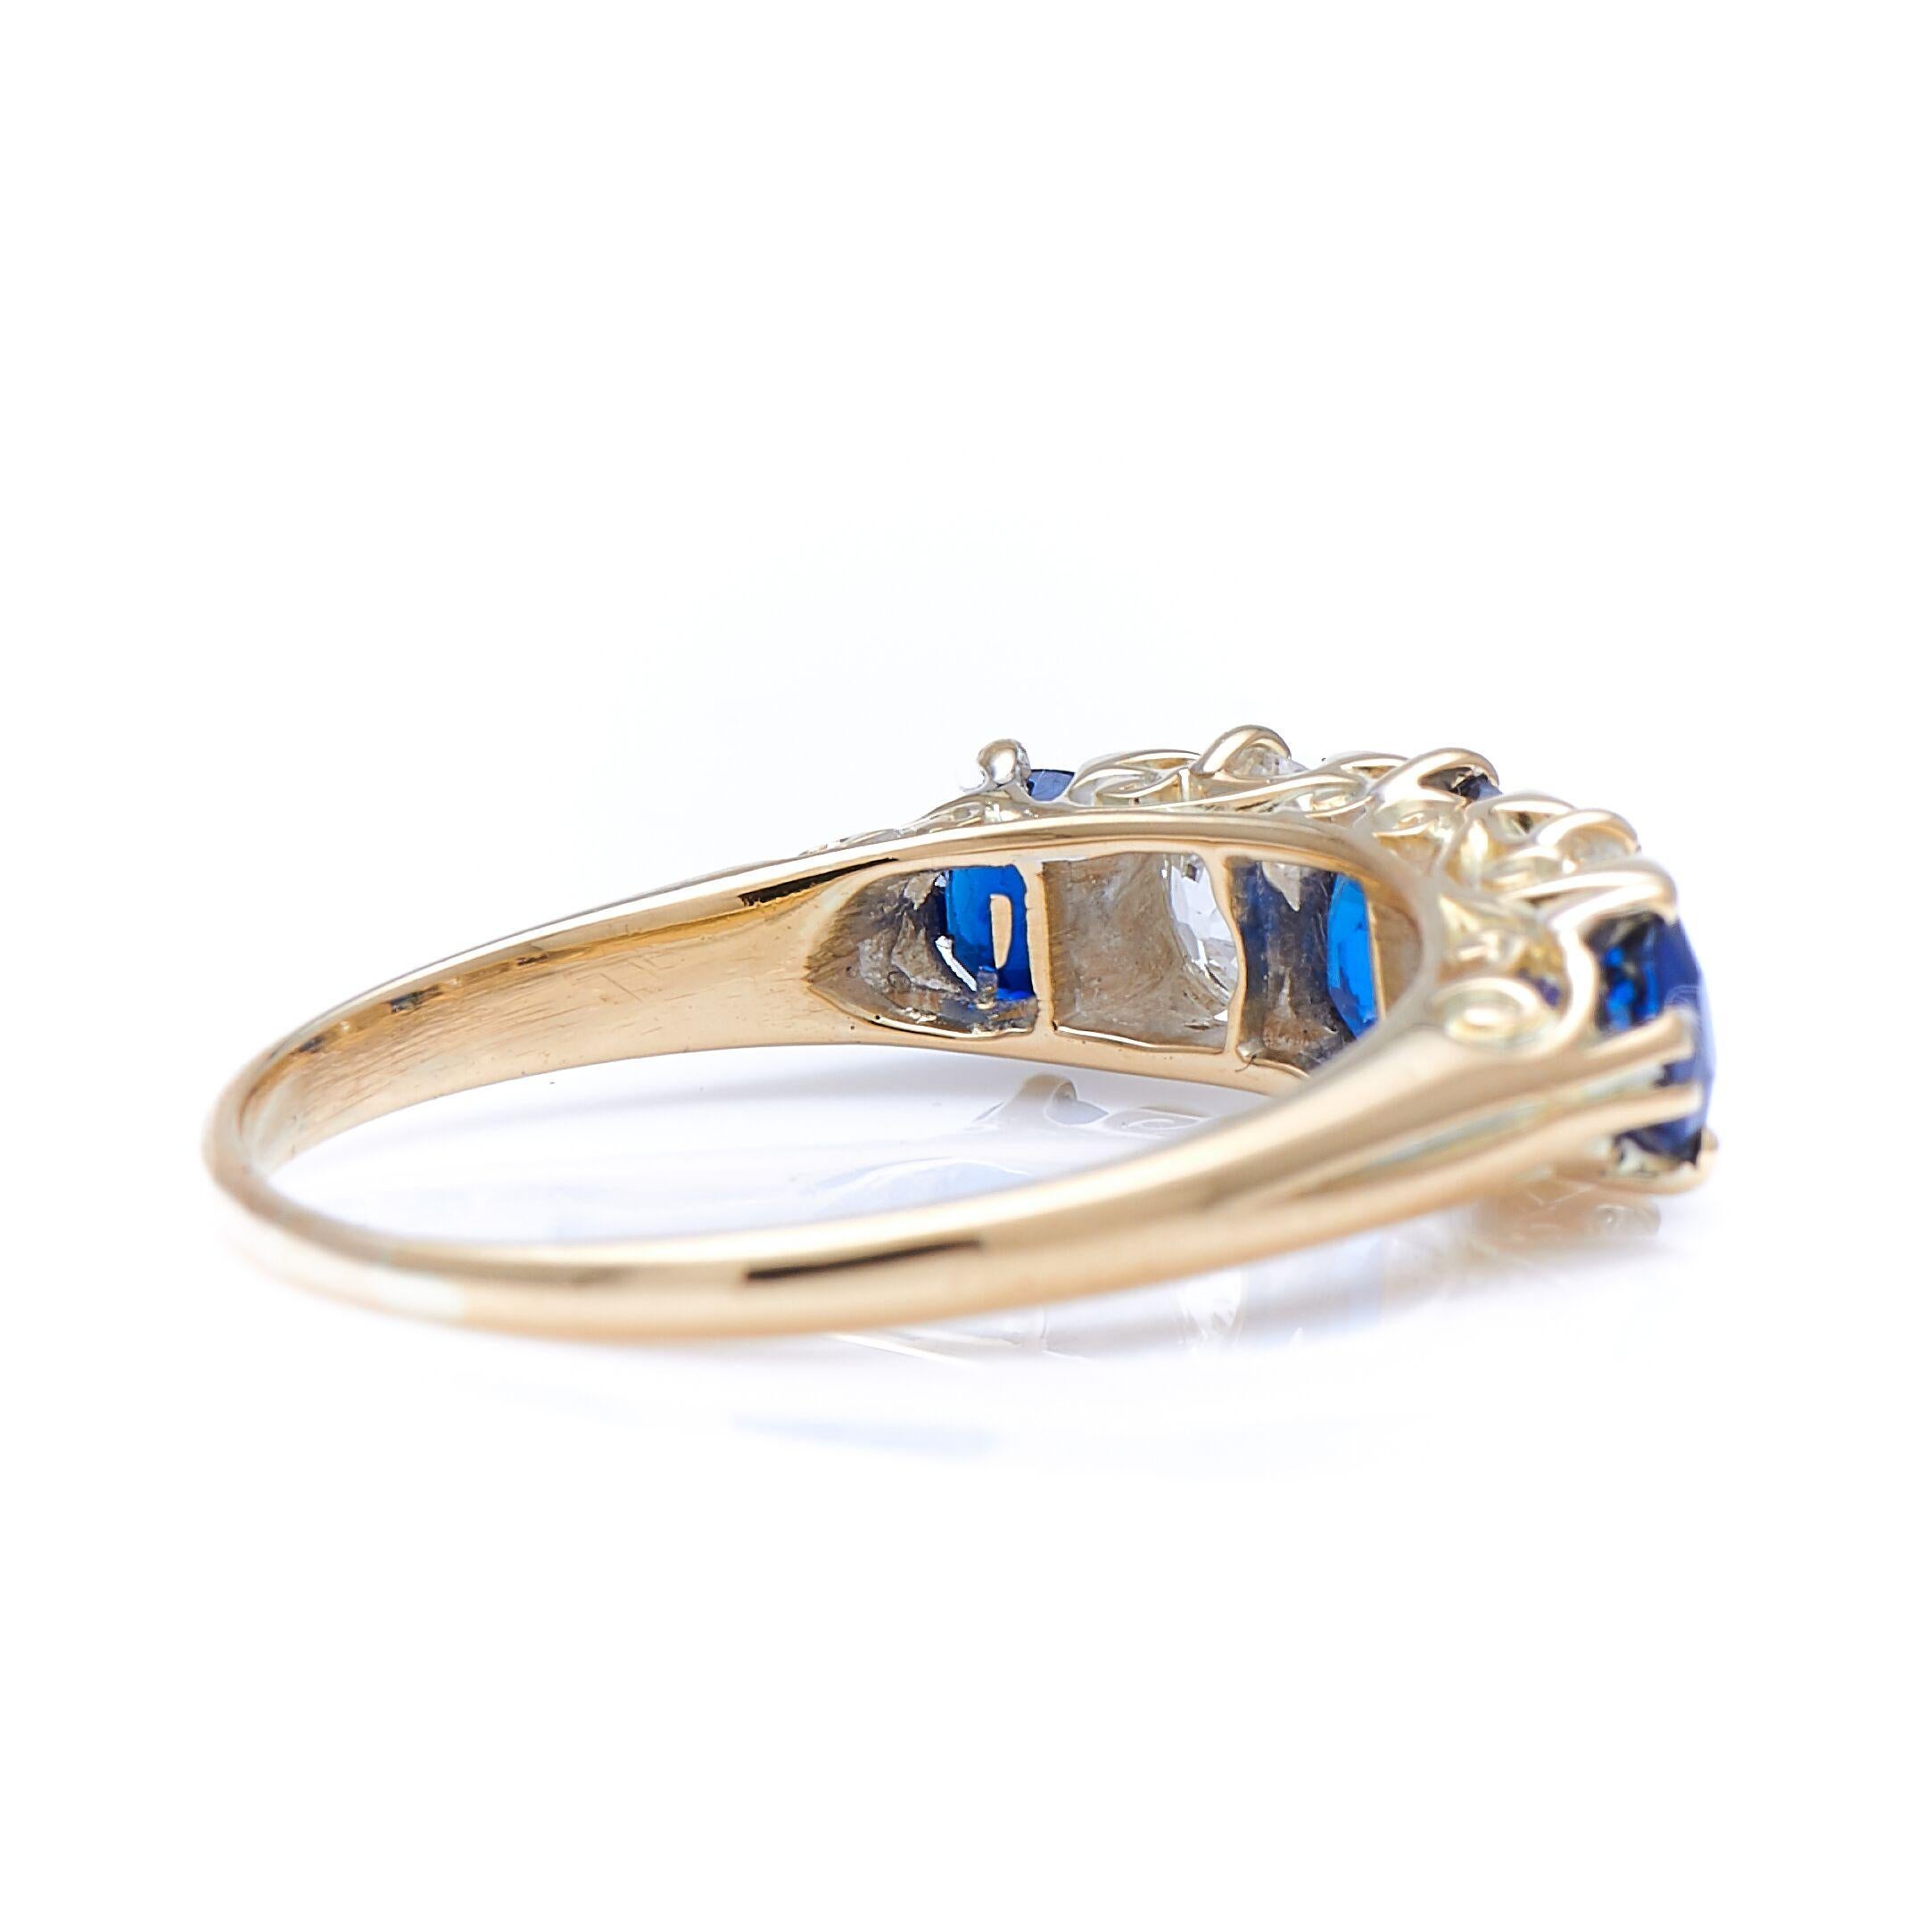 18ct sapphire and diamond ring